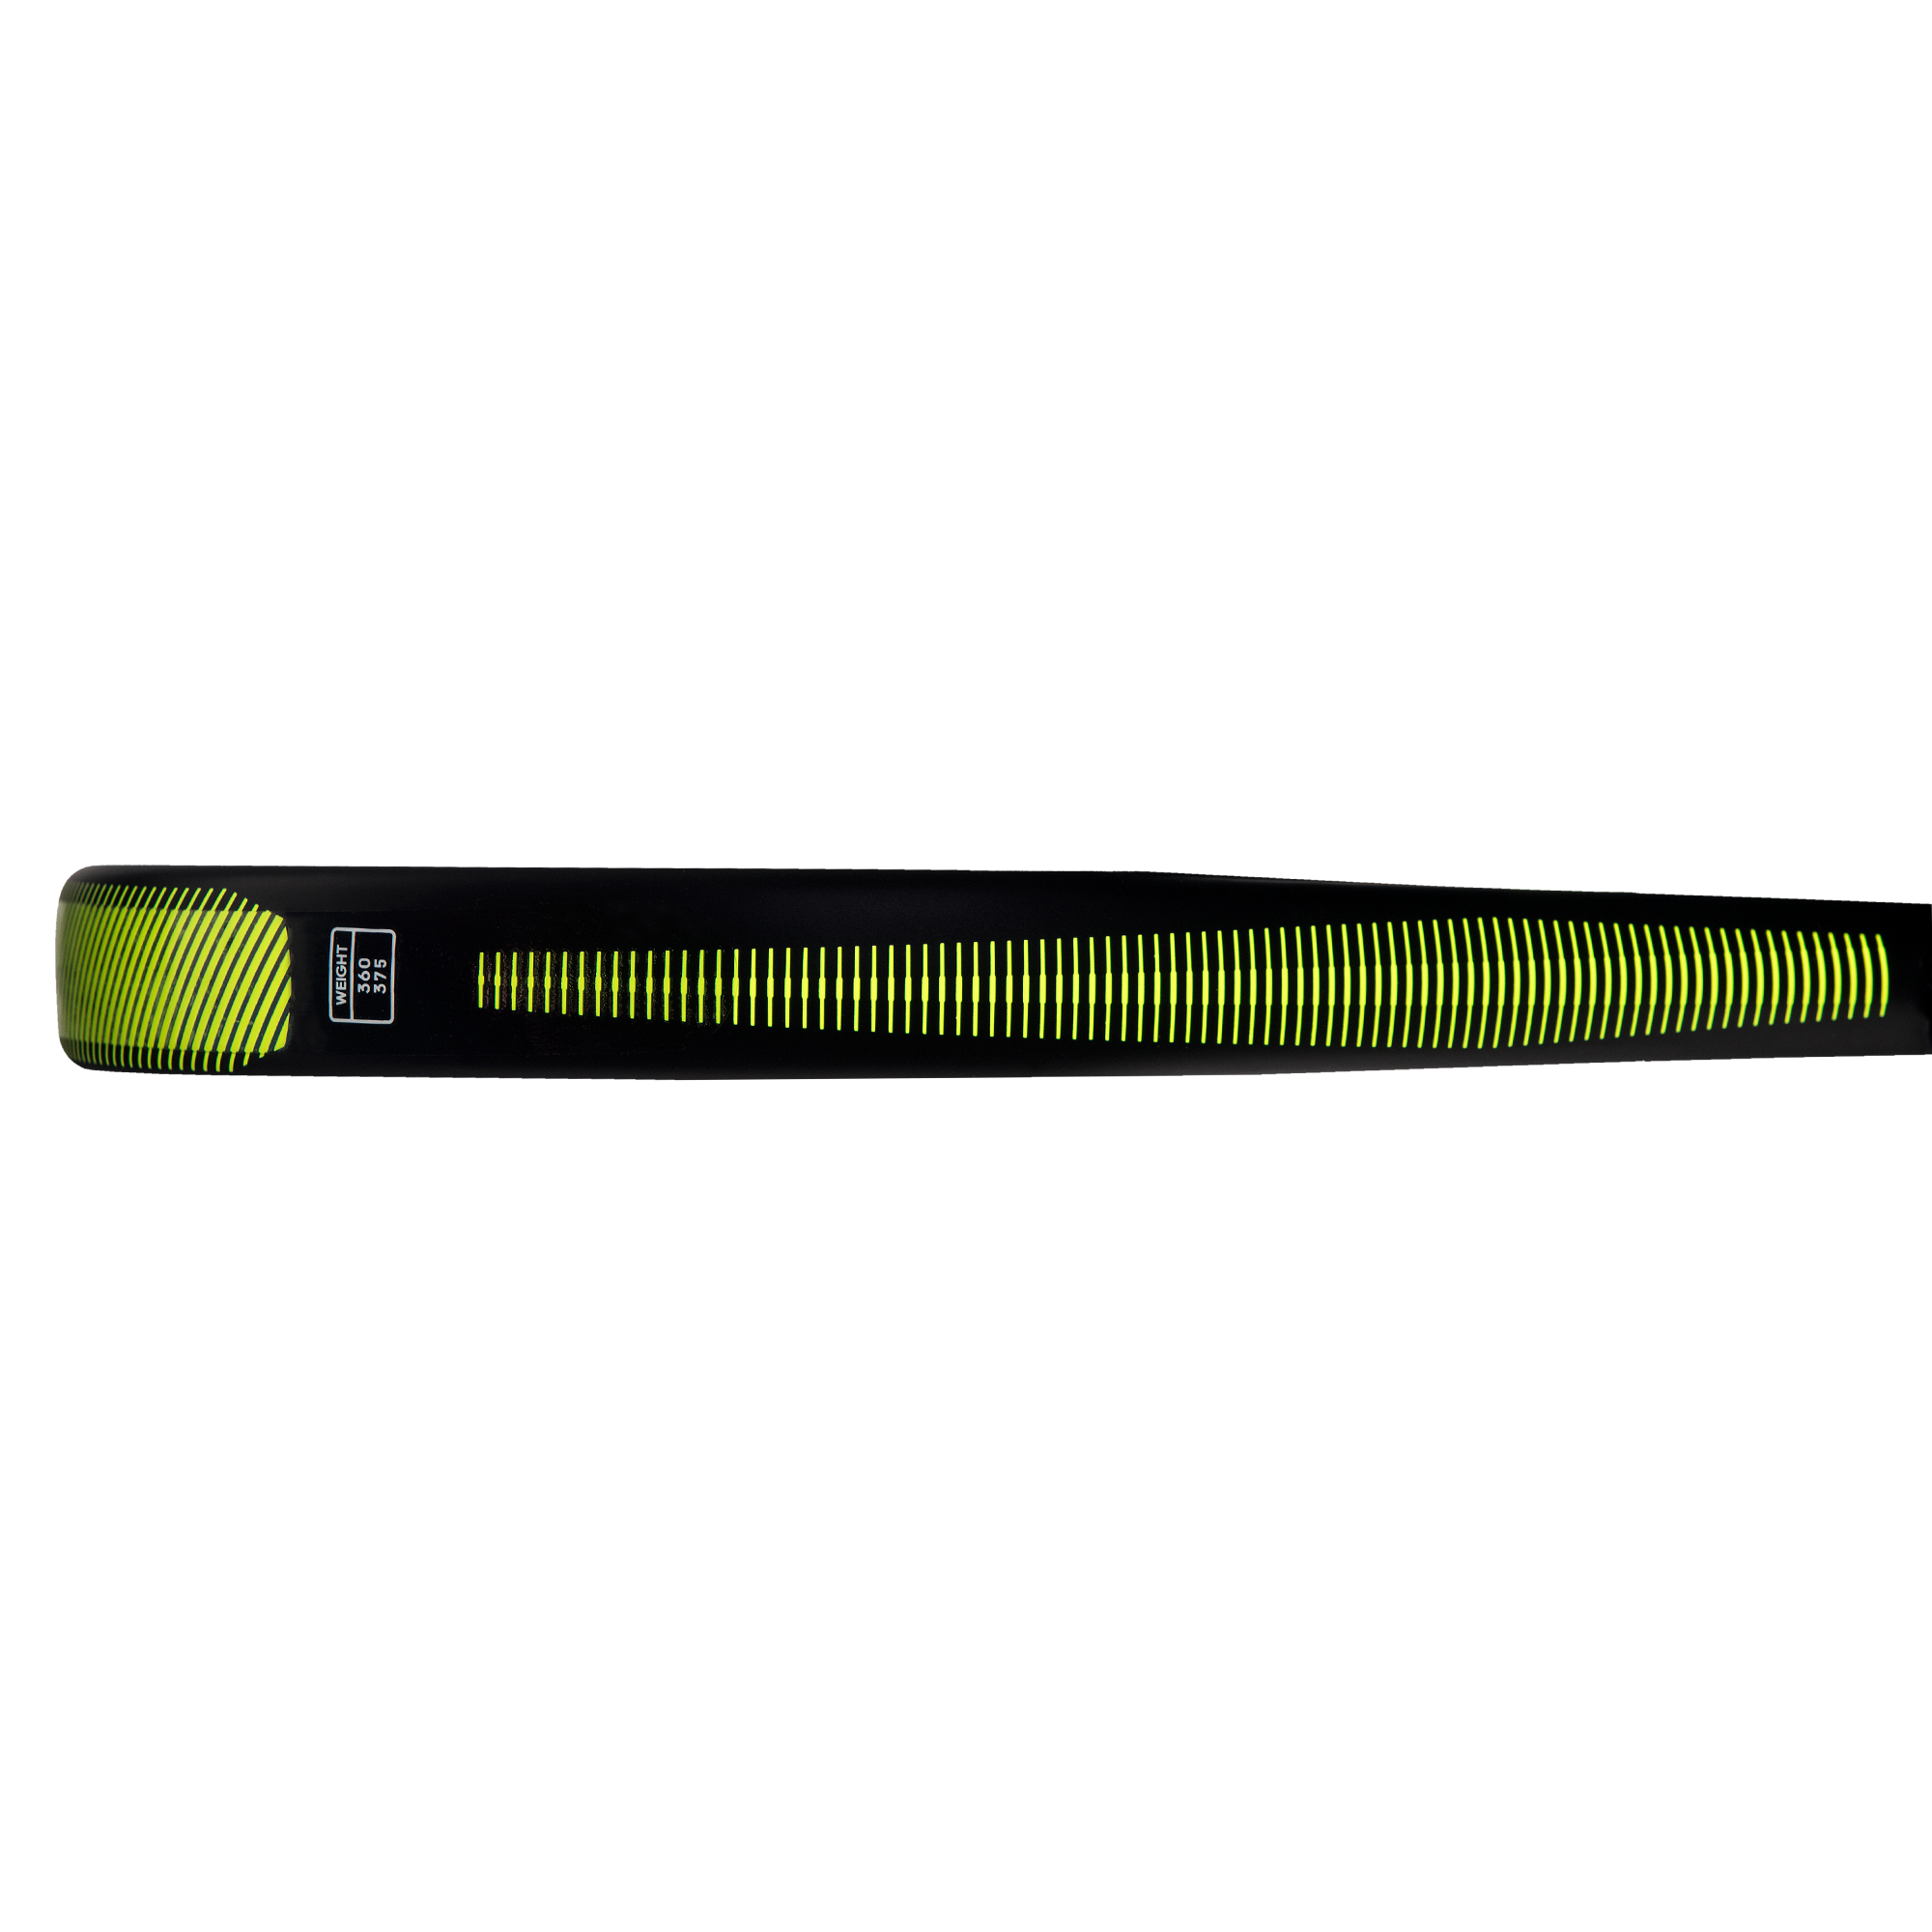 adidas RX Series Lime padelracket 2024